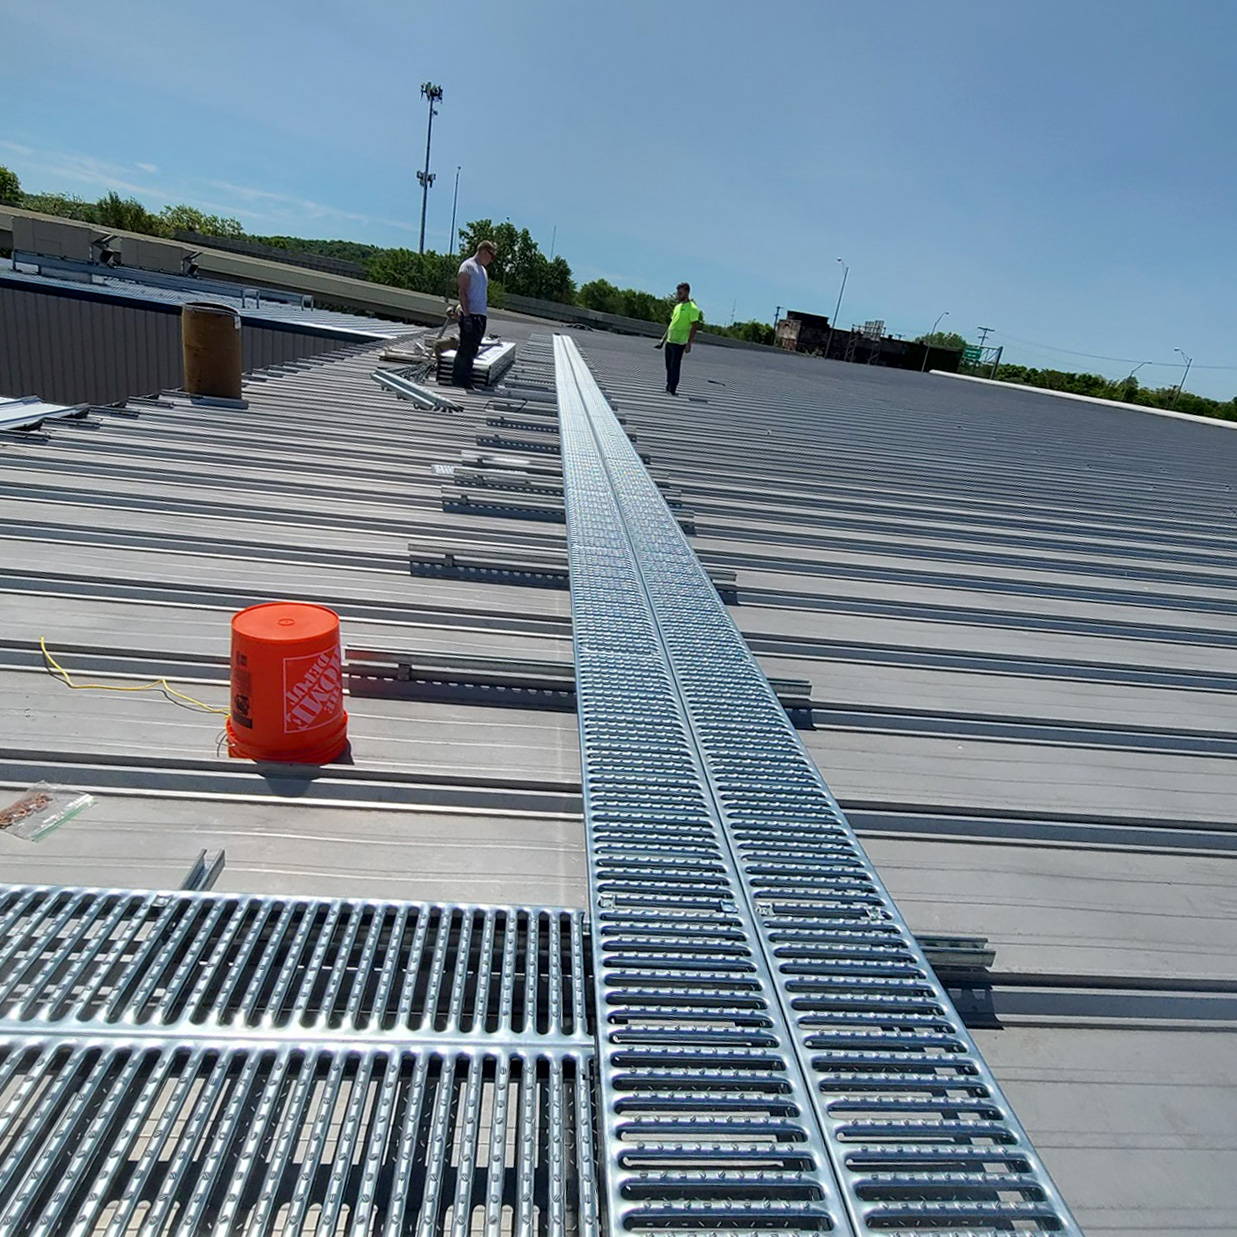 unistrut roofwalk installation process